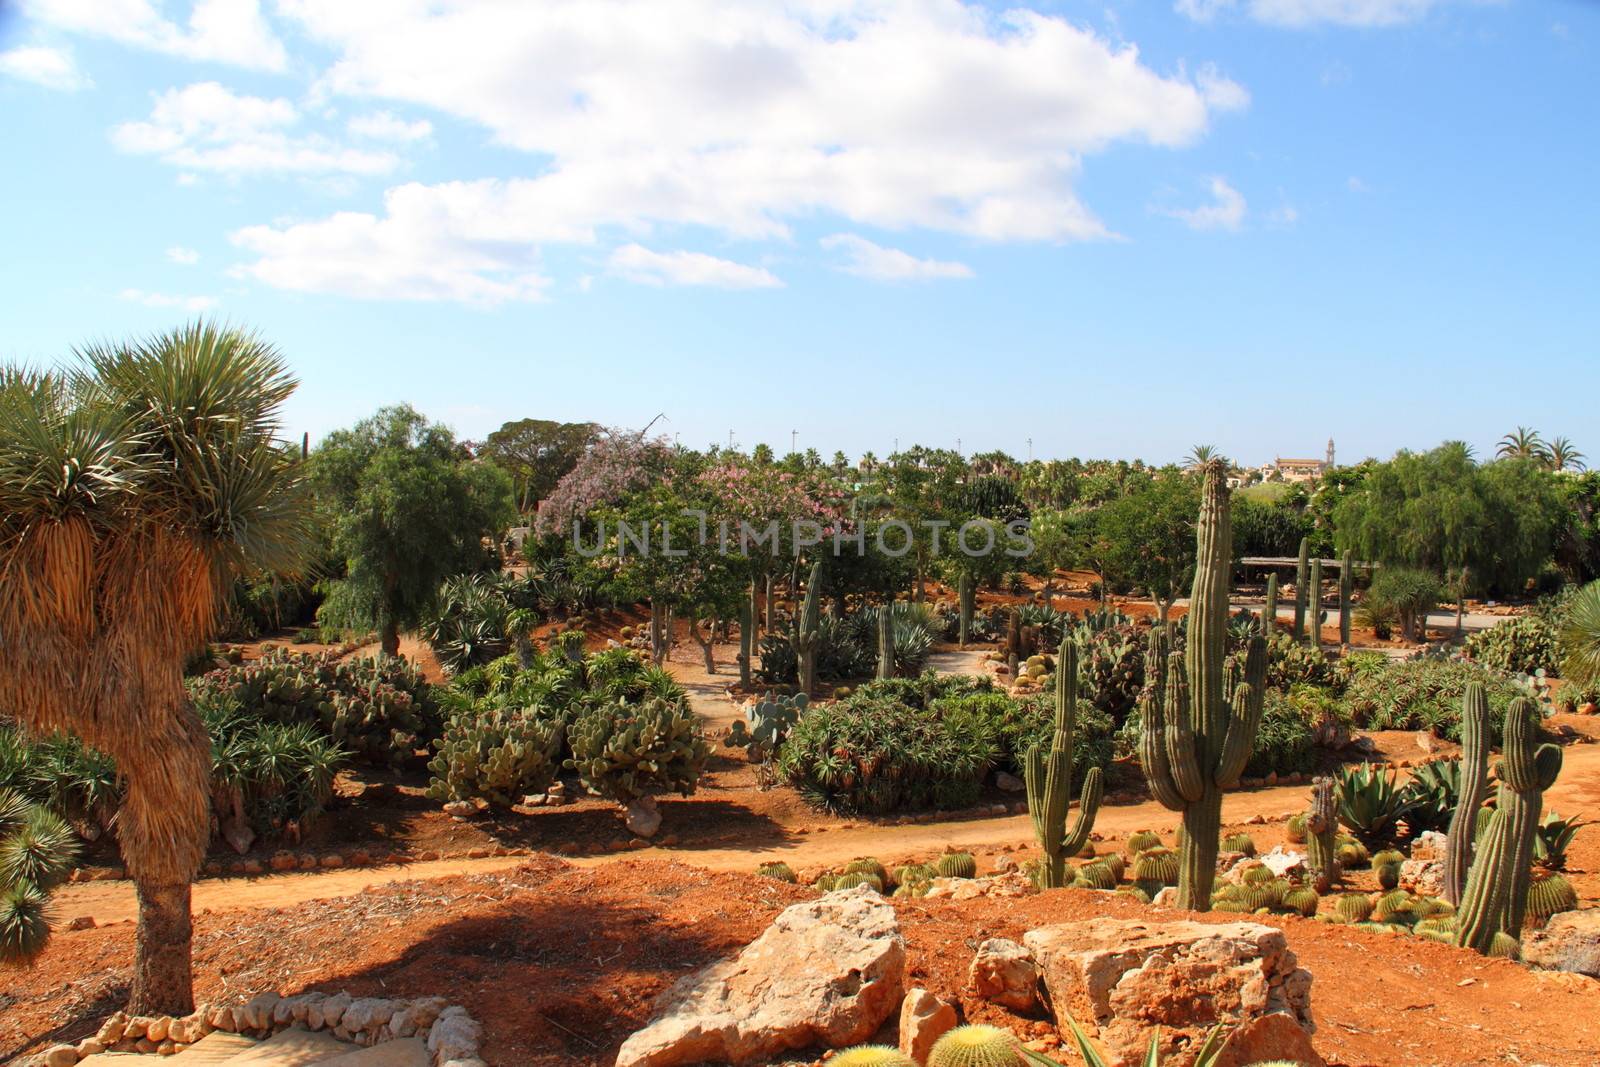 Cacti at Bontanicactus,Ses Selines, Mallorca, Spain